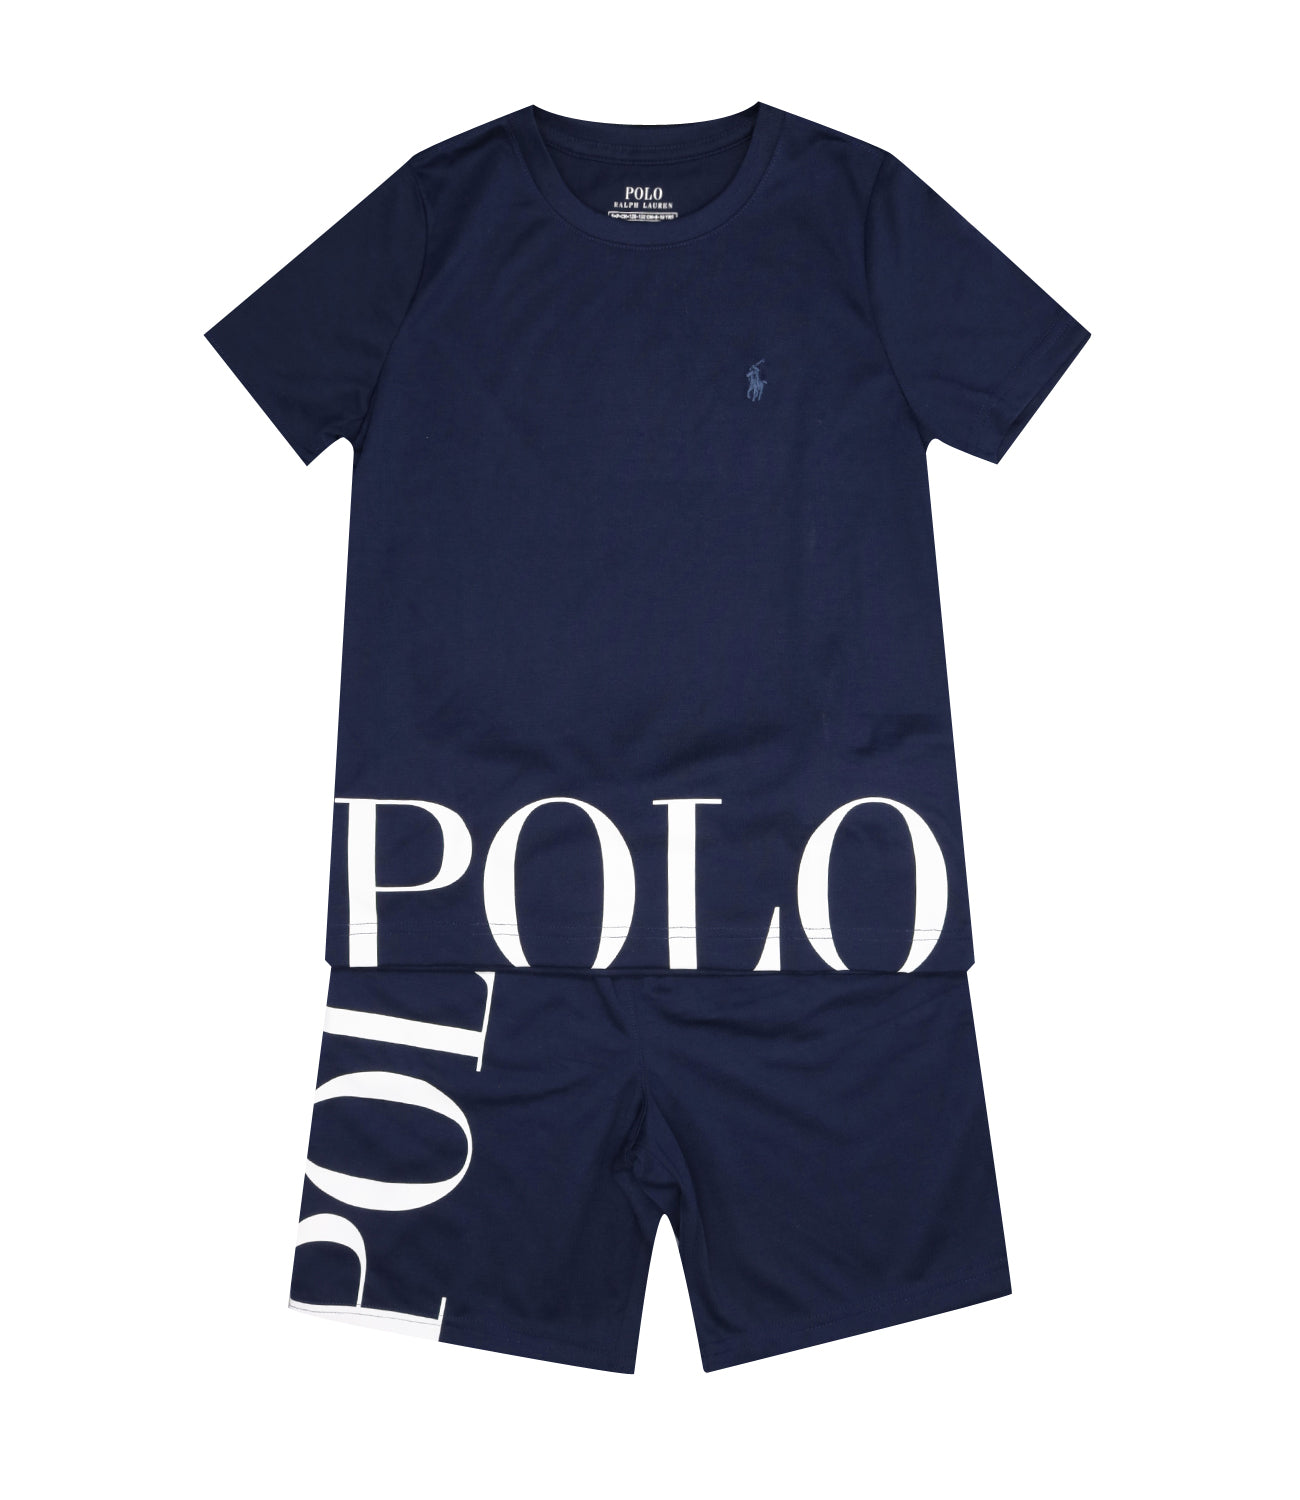 Ralph Lauren Childrenswear | Navy Blue T-Shirt and Bermuda Shorts Set